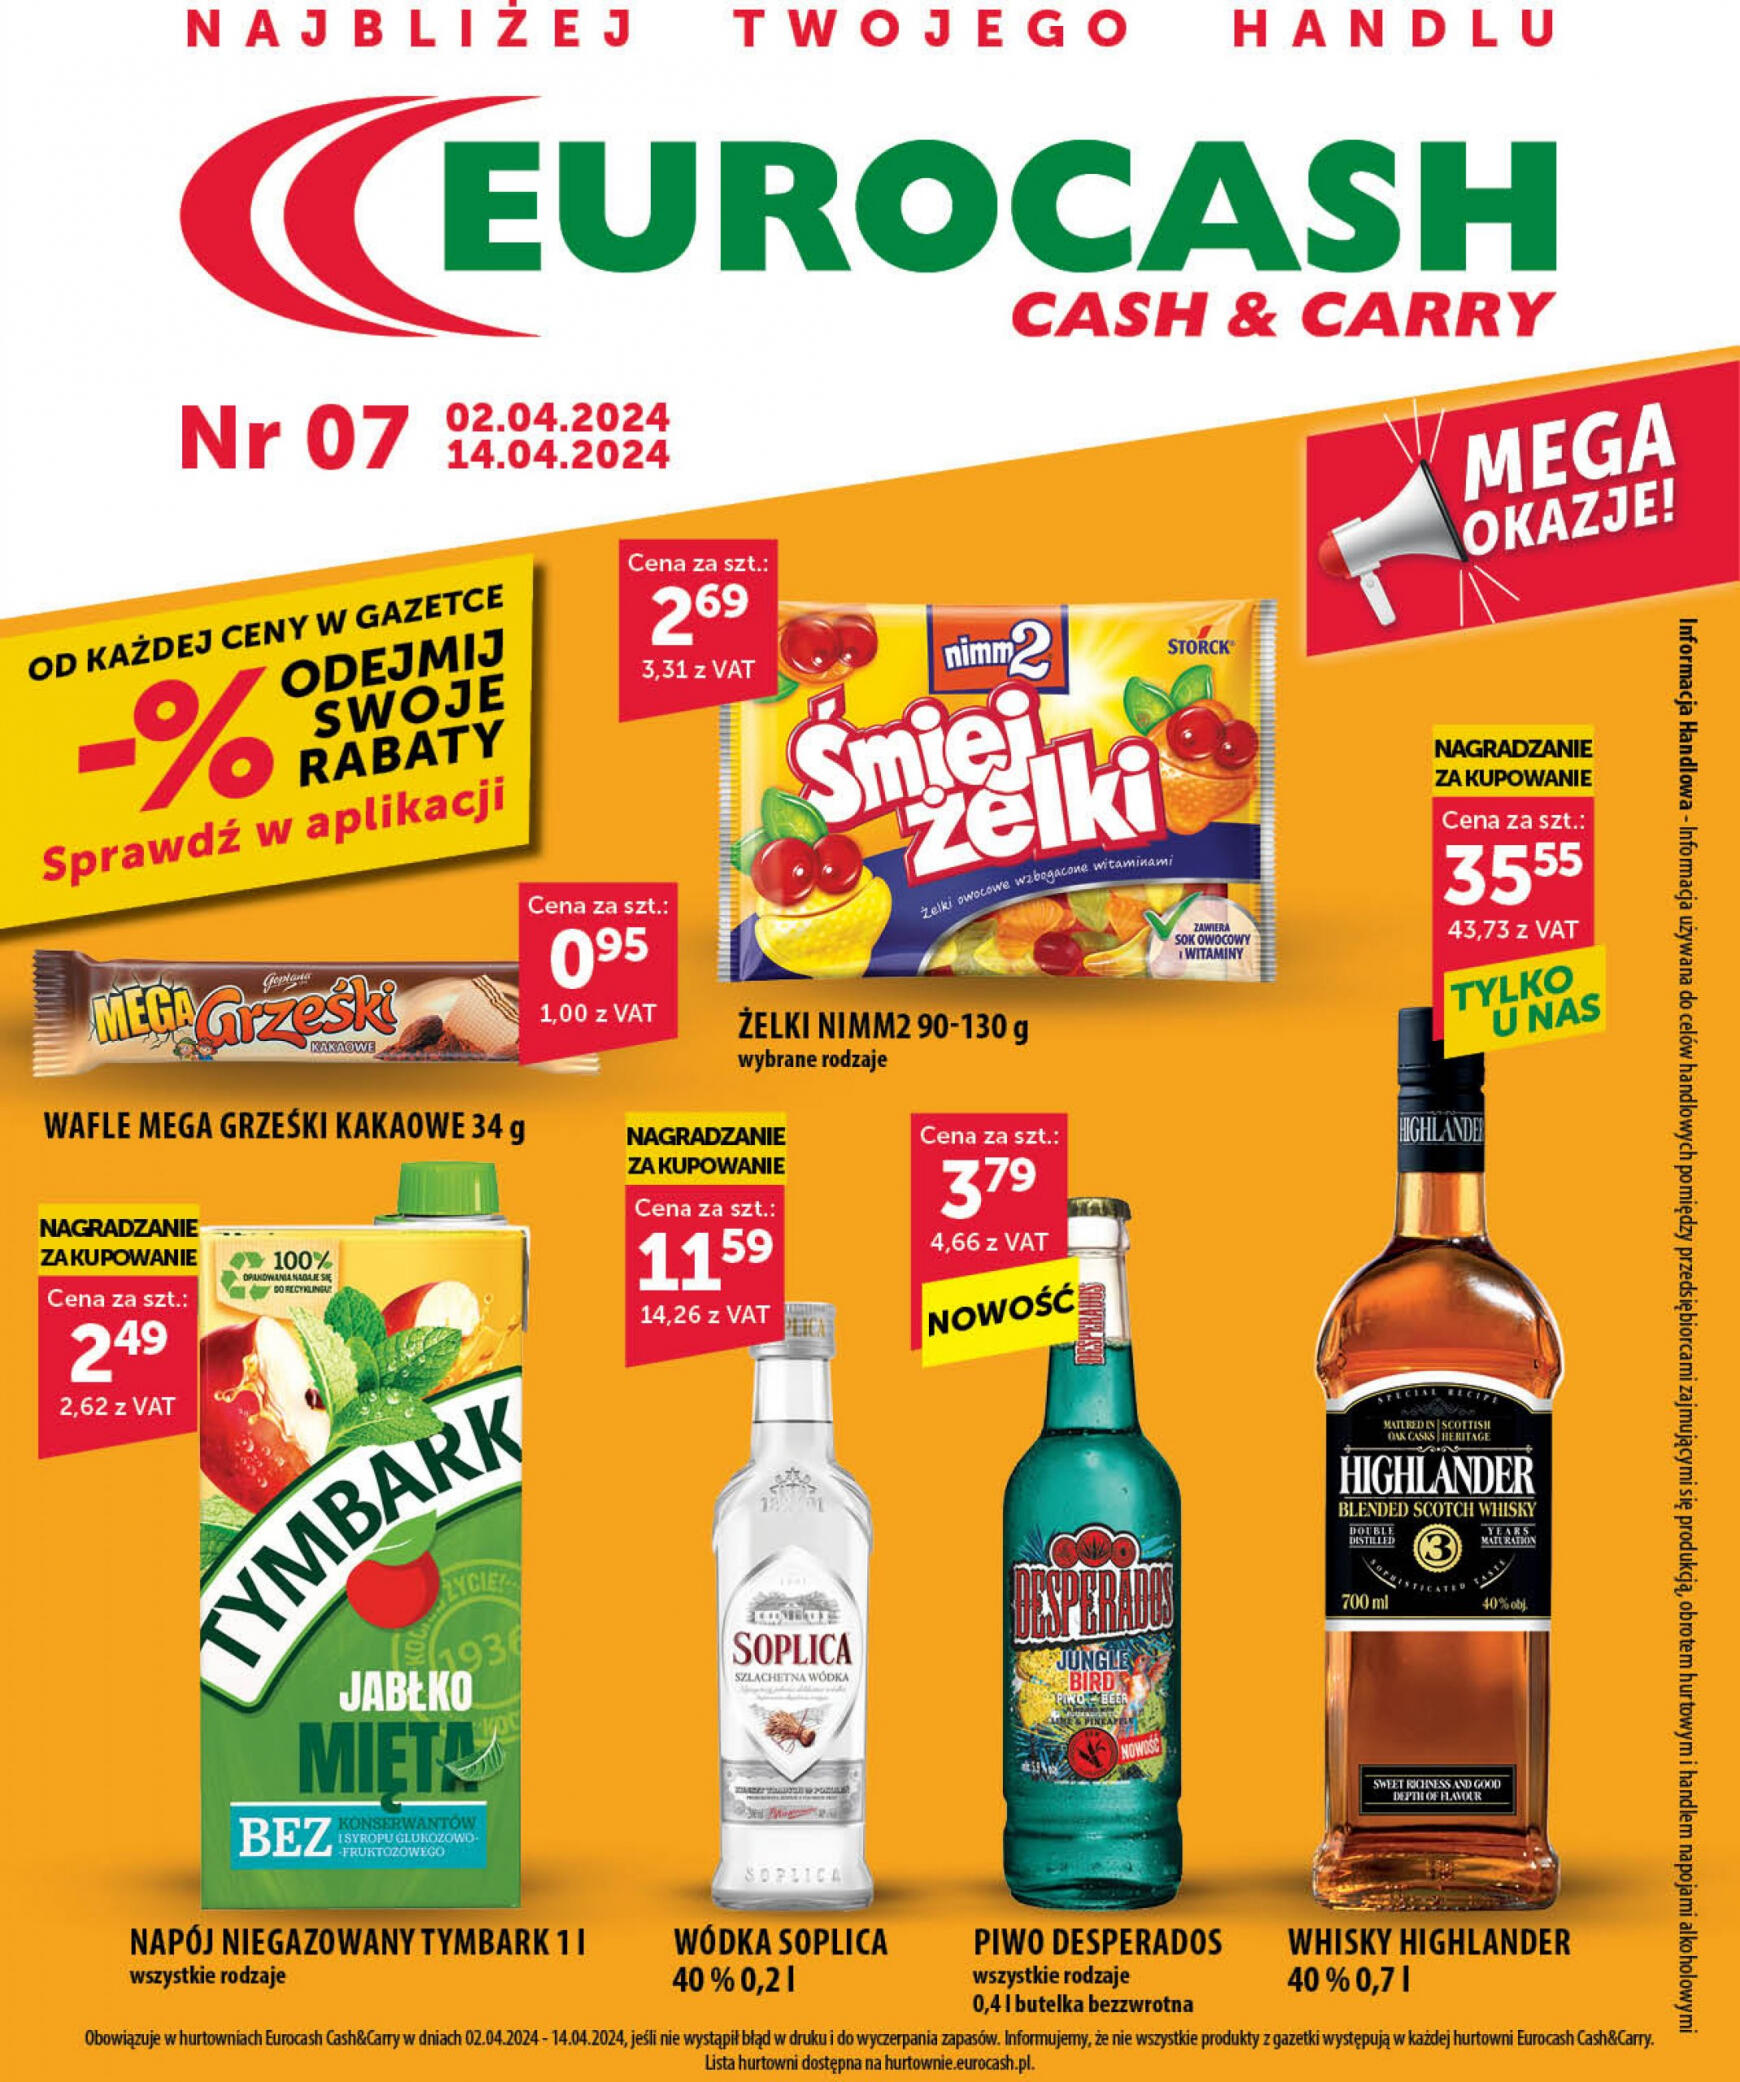 eurocash - Eurocash - Gazetka Cash&Carry obowiązuje od 02.04.2024